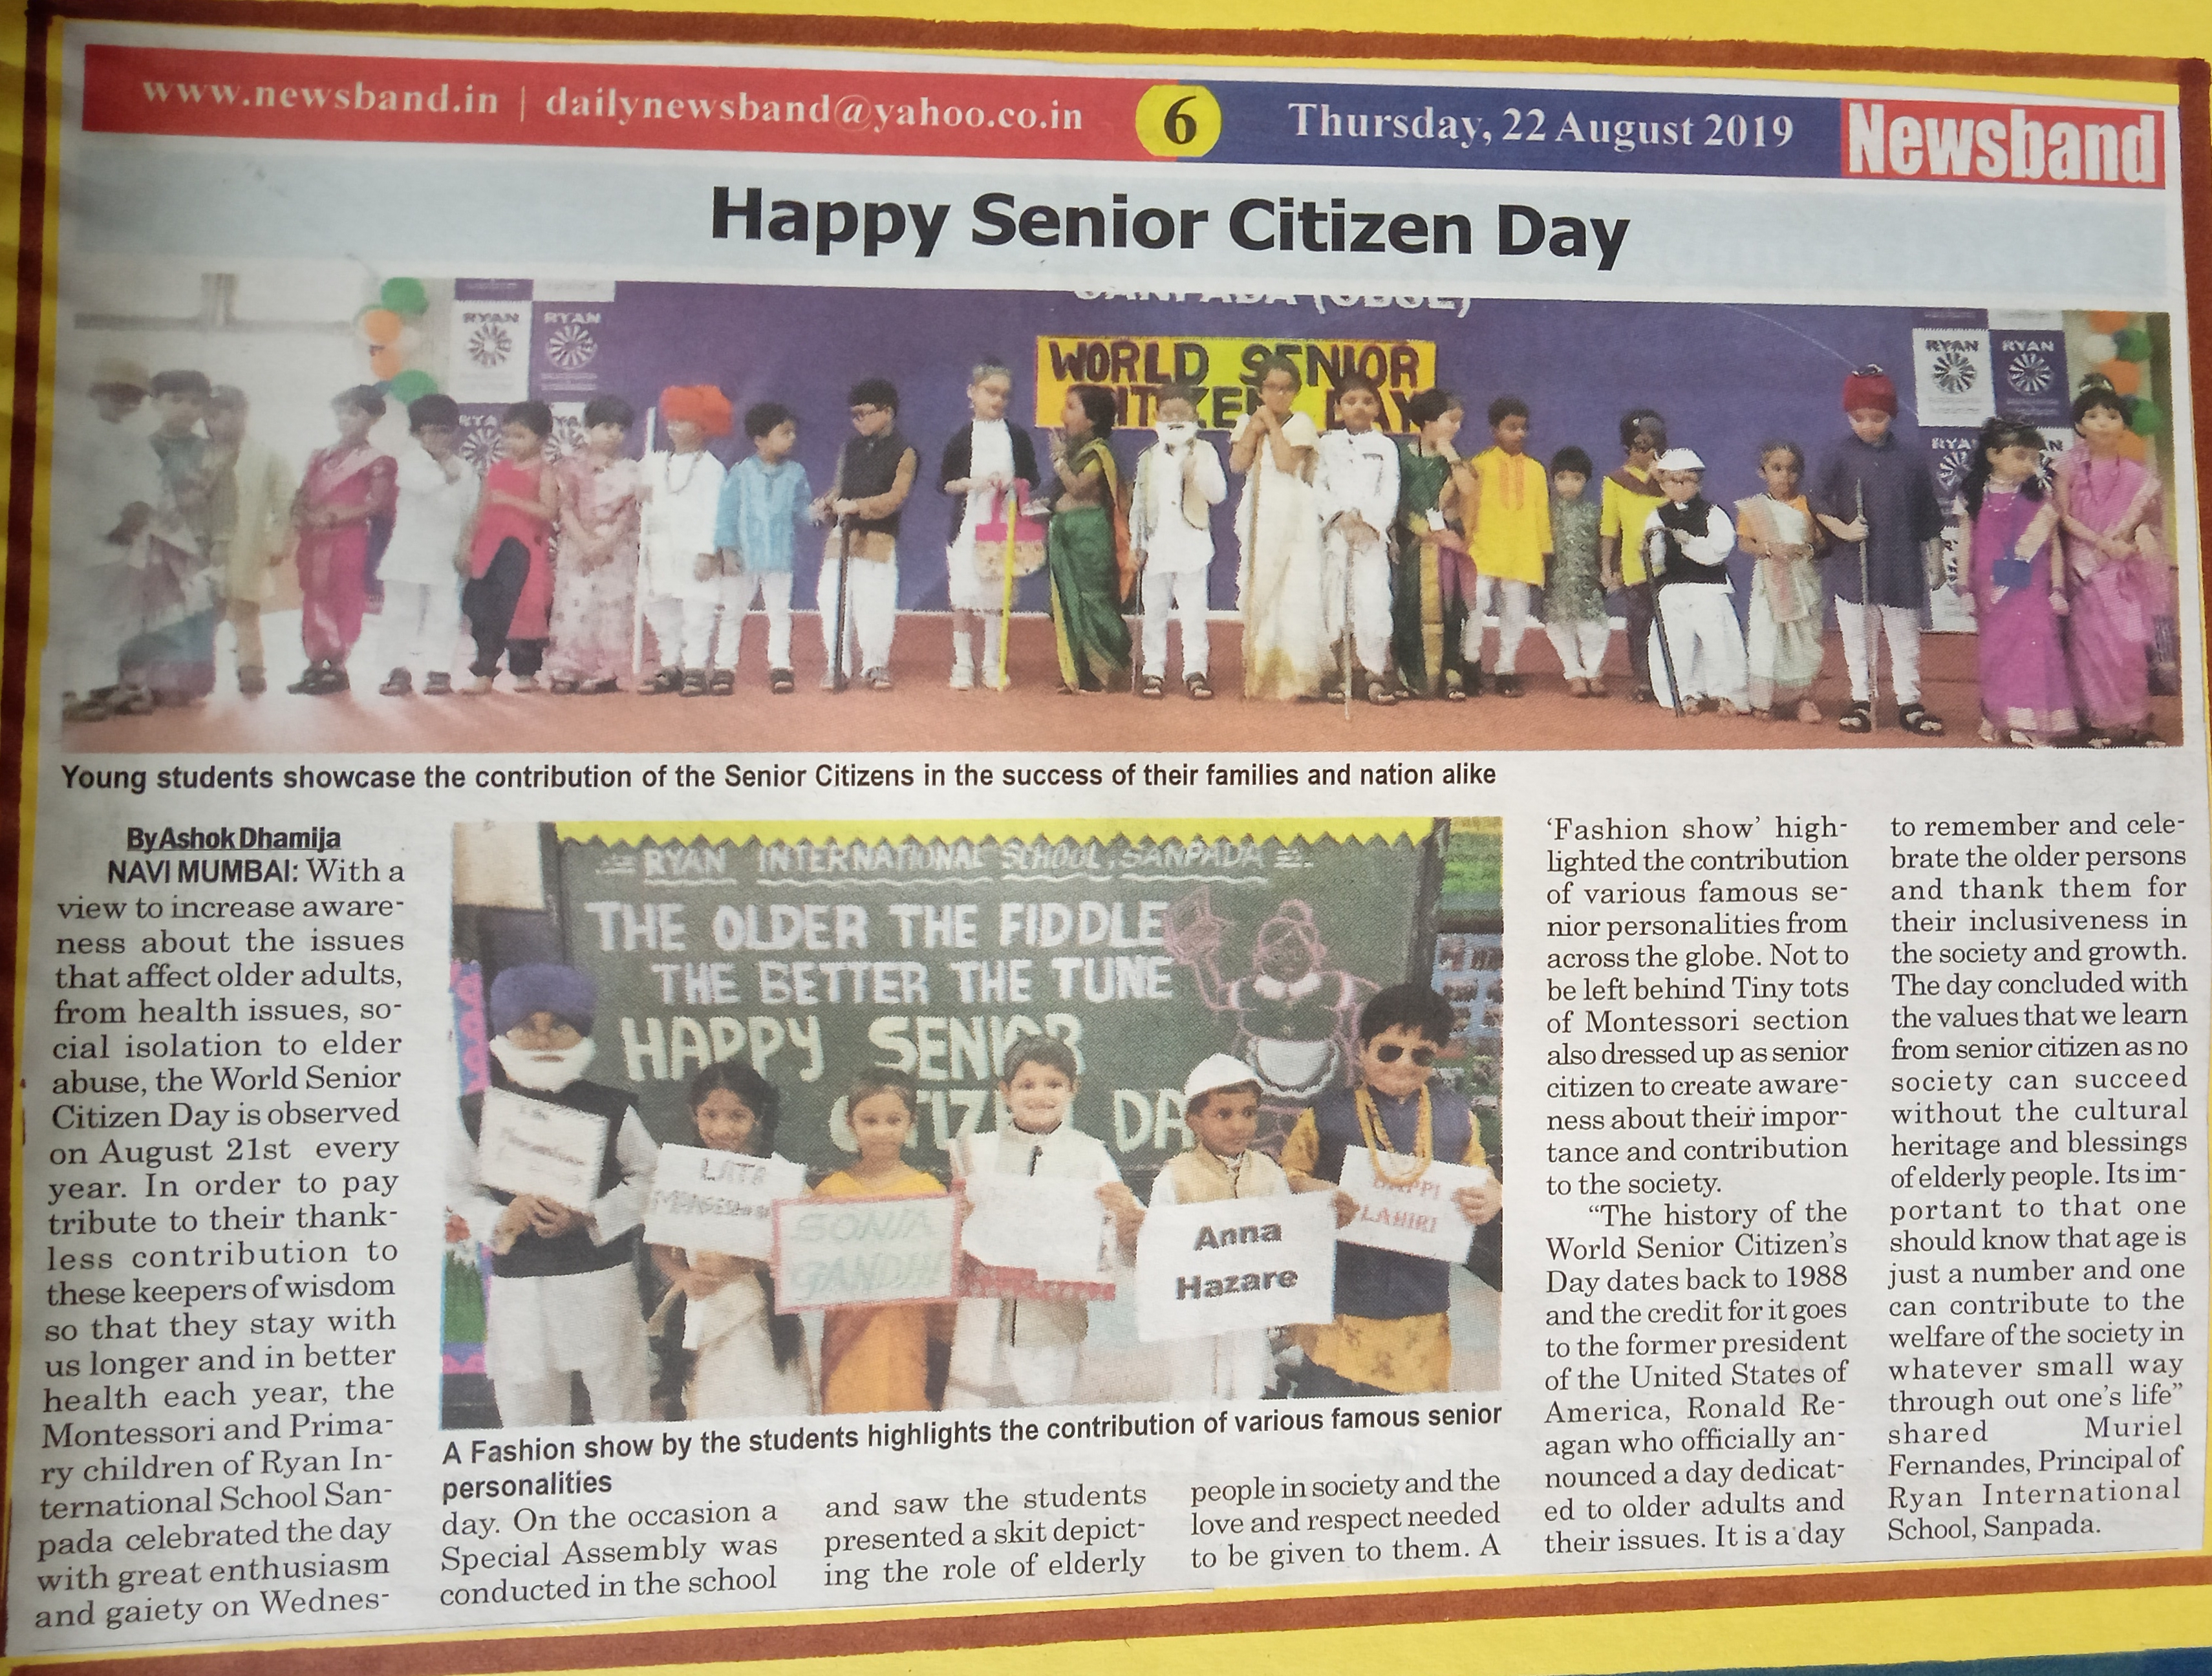 Senior Citizen Day was featured in Newsband - Ryan International School, Sanpada